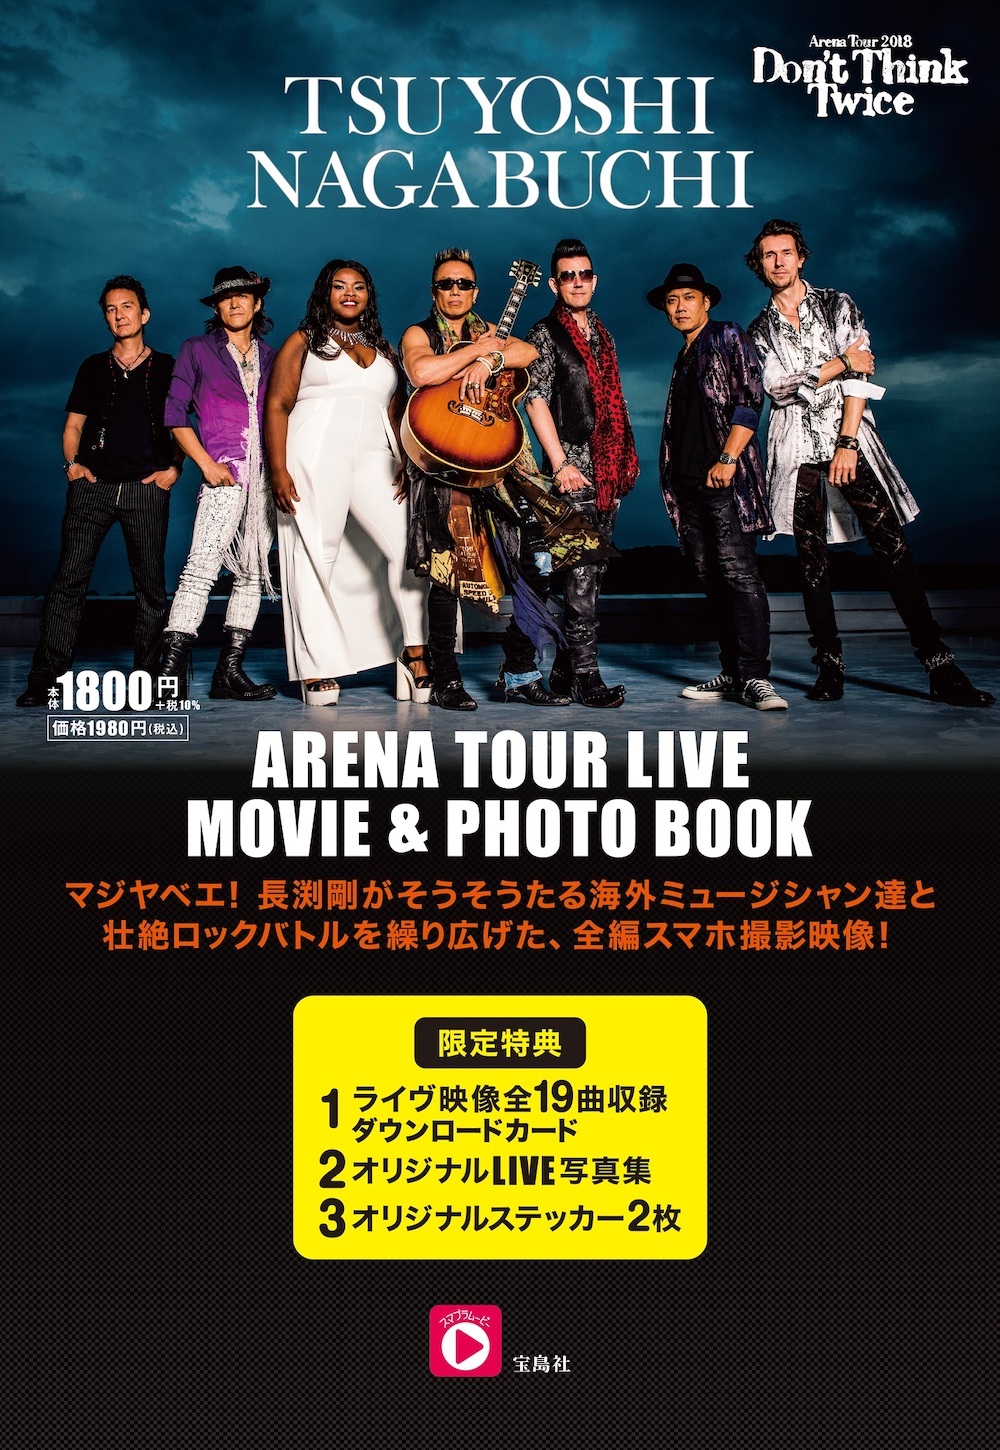 『TSUYOSHI NAGABUCHI ARENA TOUR LIVE MOVIE & PHOTO BOOK』通常版